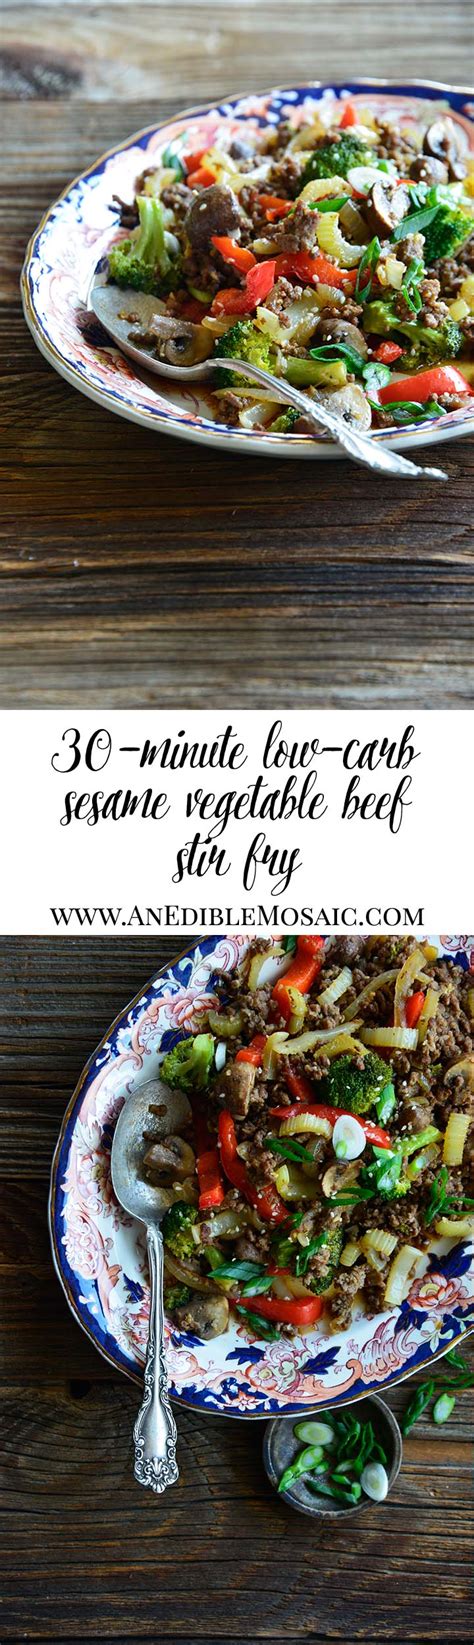 30 Minute Low Carb Sesame Vegetable Beef Stir Fry Recipe